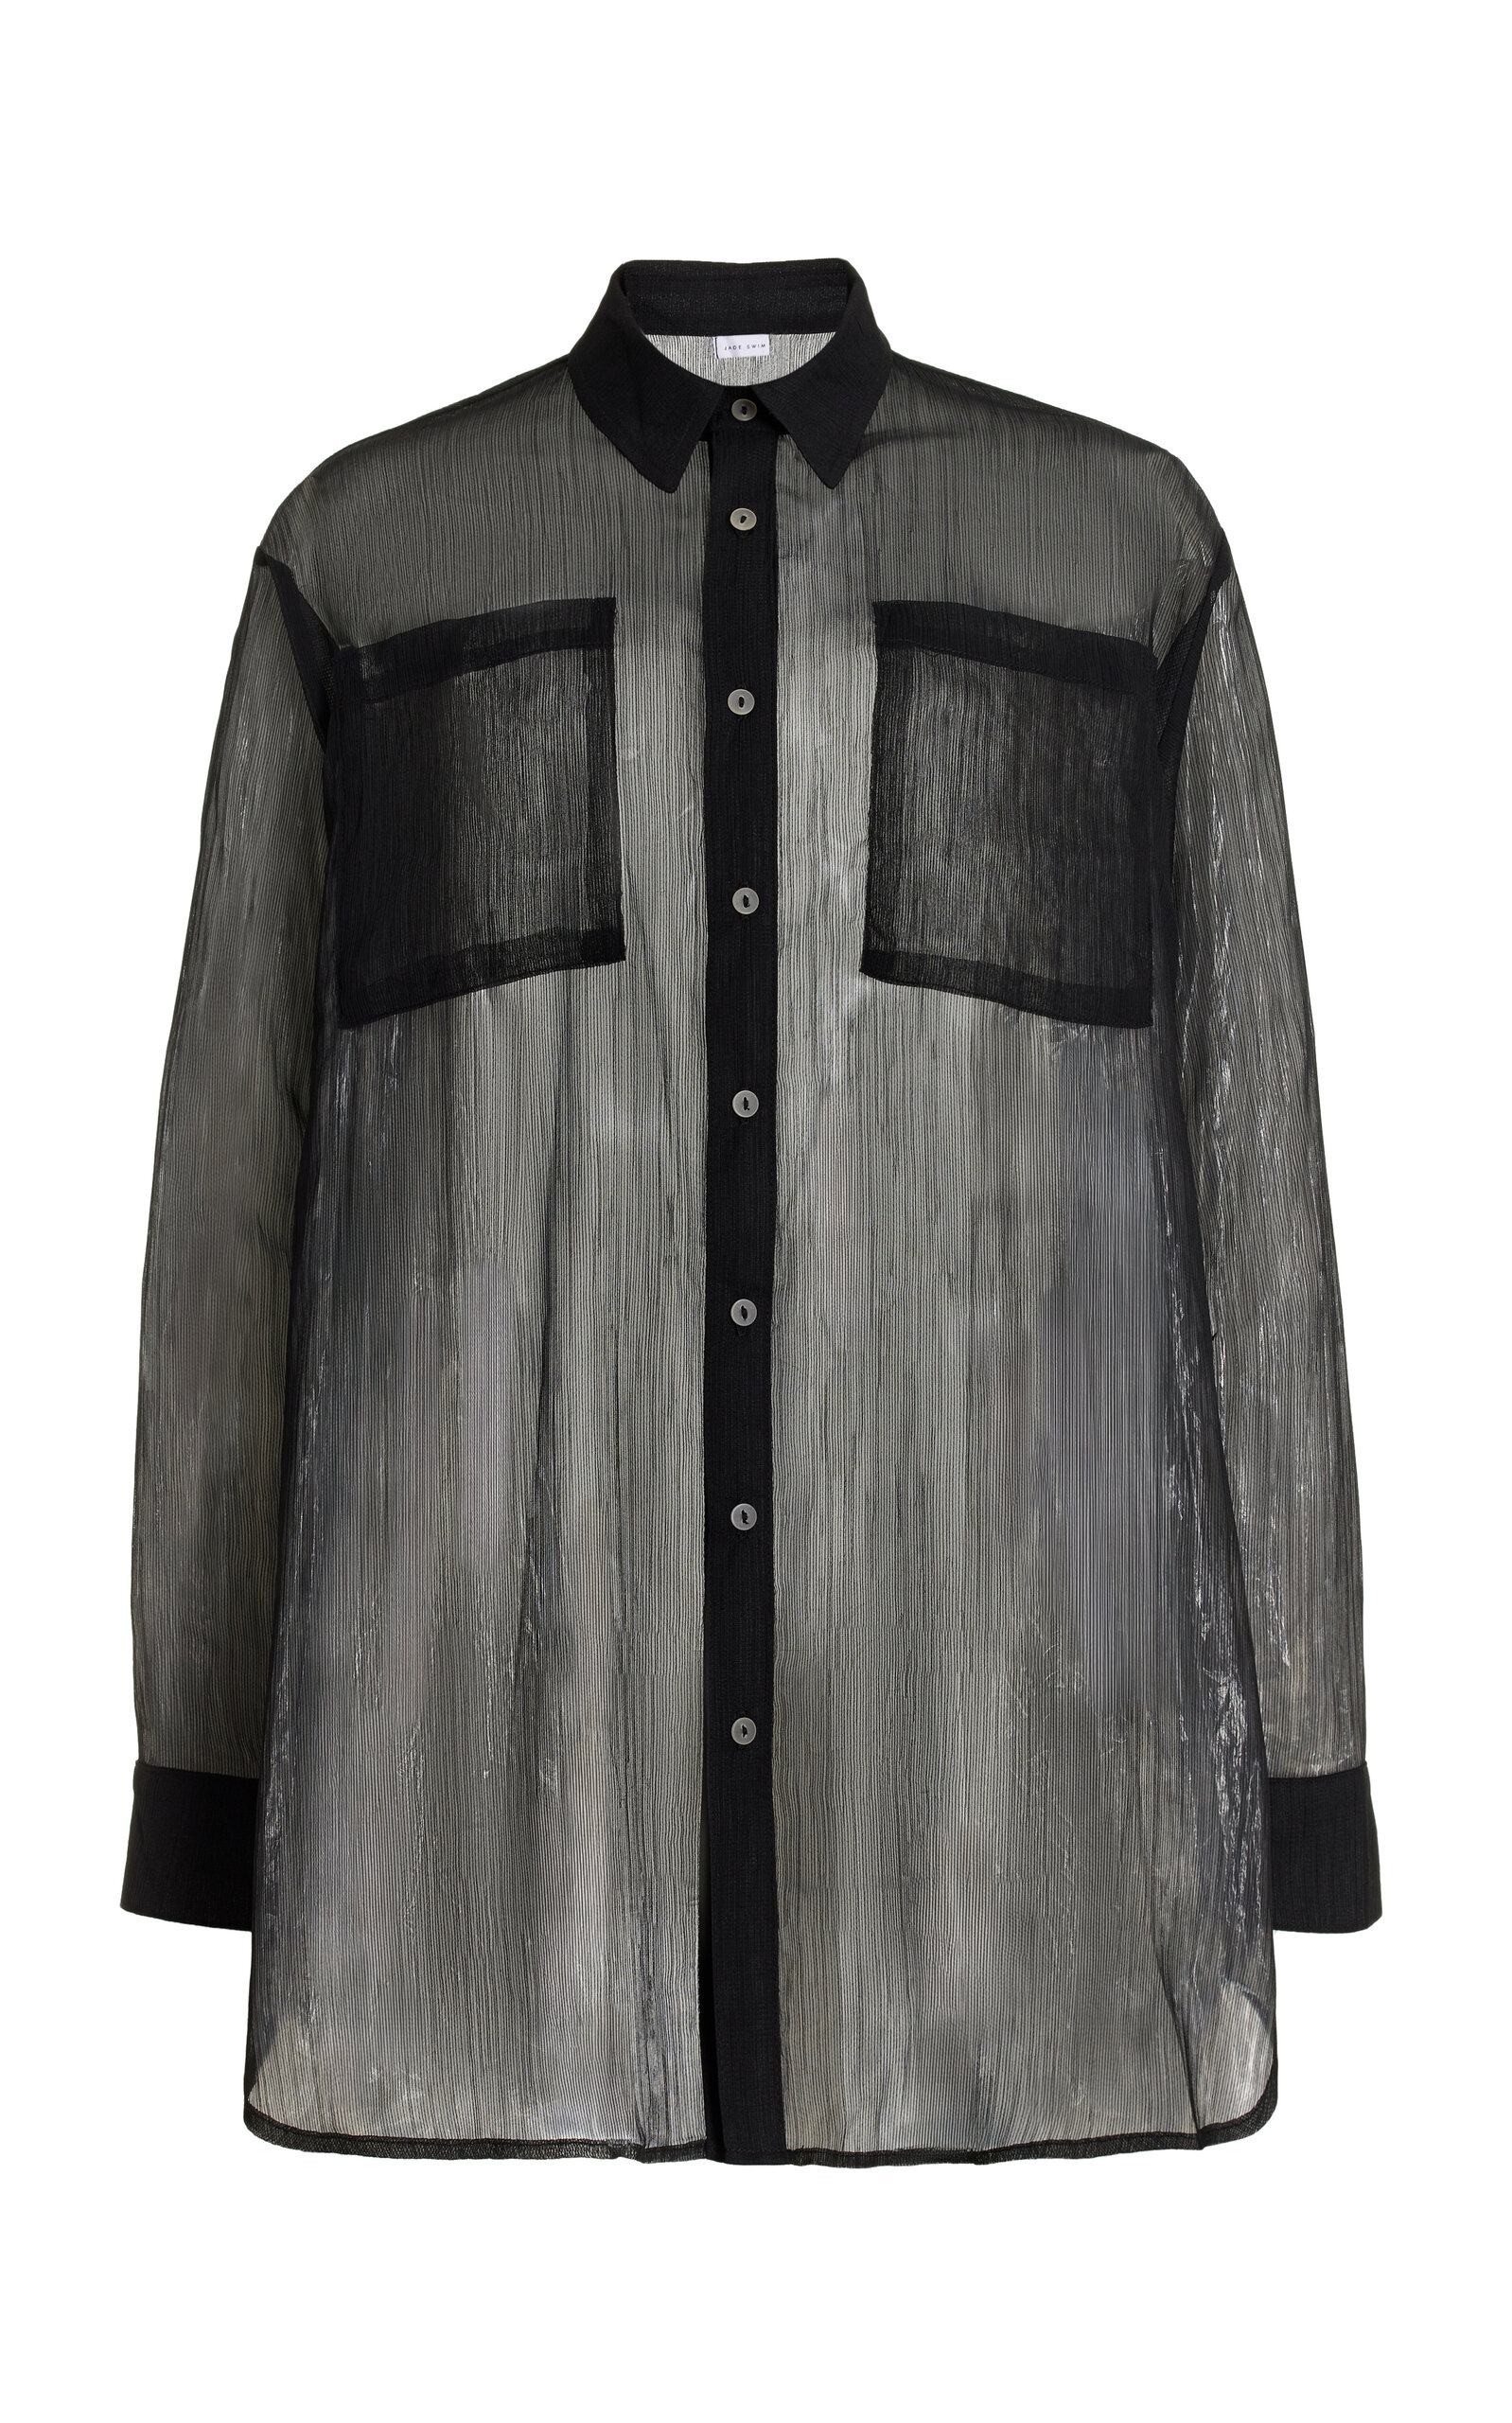 JADE SWIM - Mika Gauze Button-Down Shirt - Black - S/M - Moda Operandi